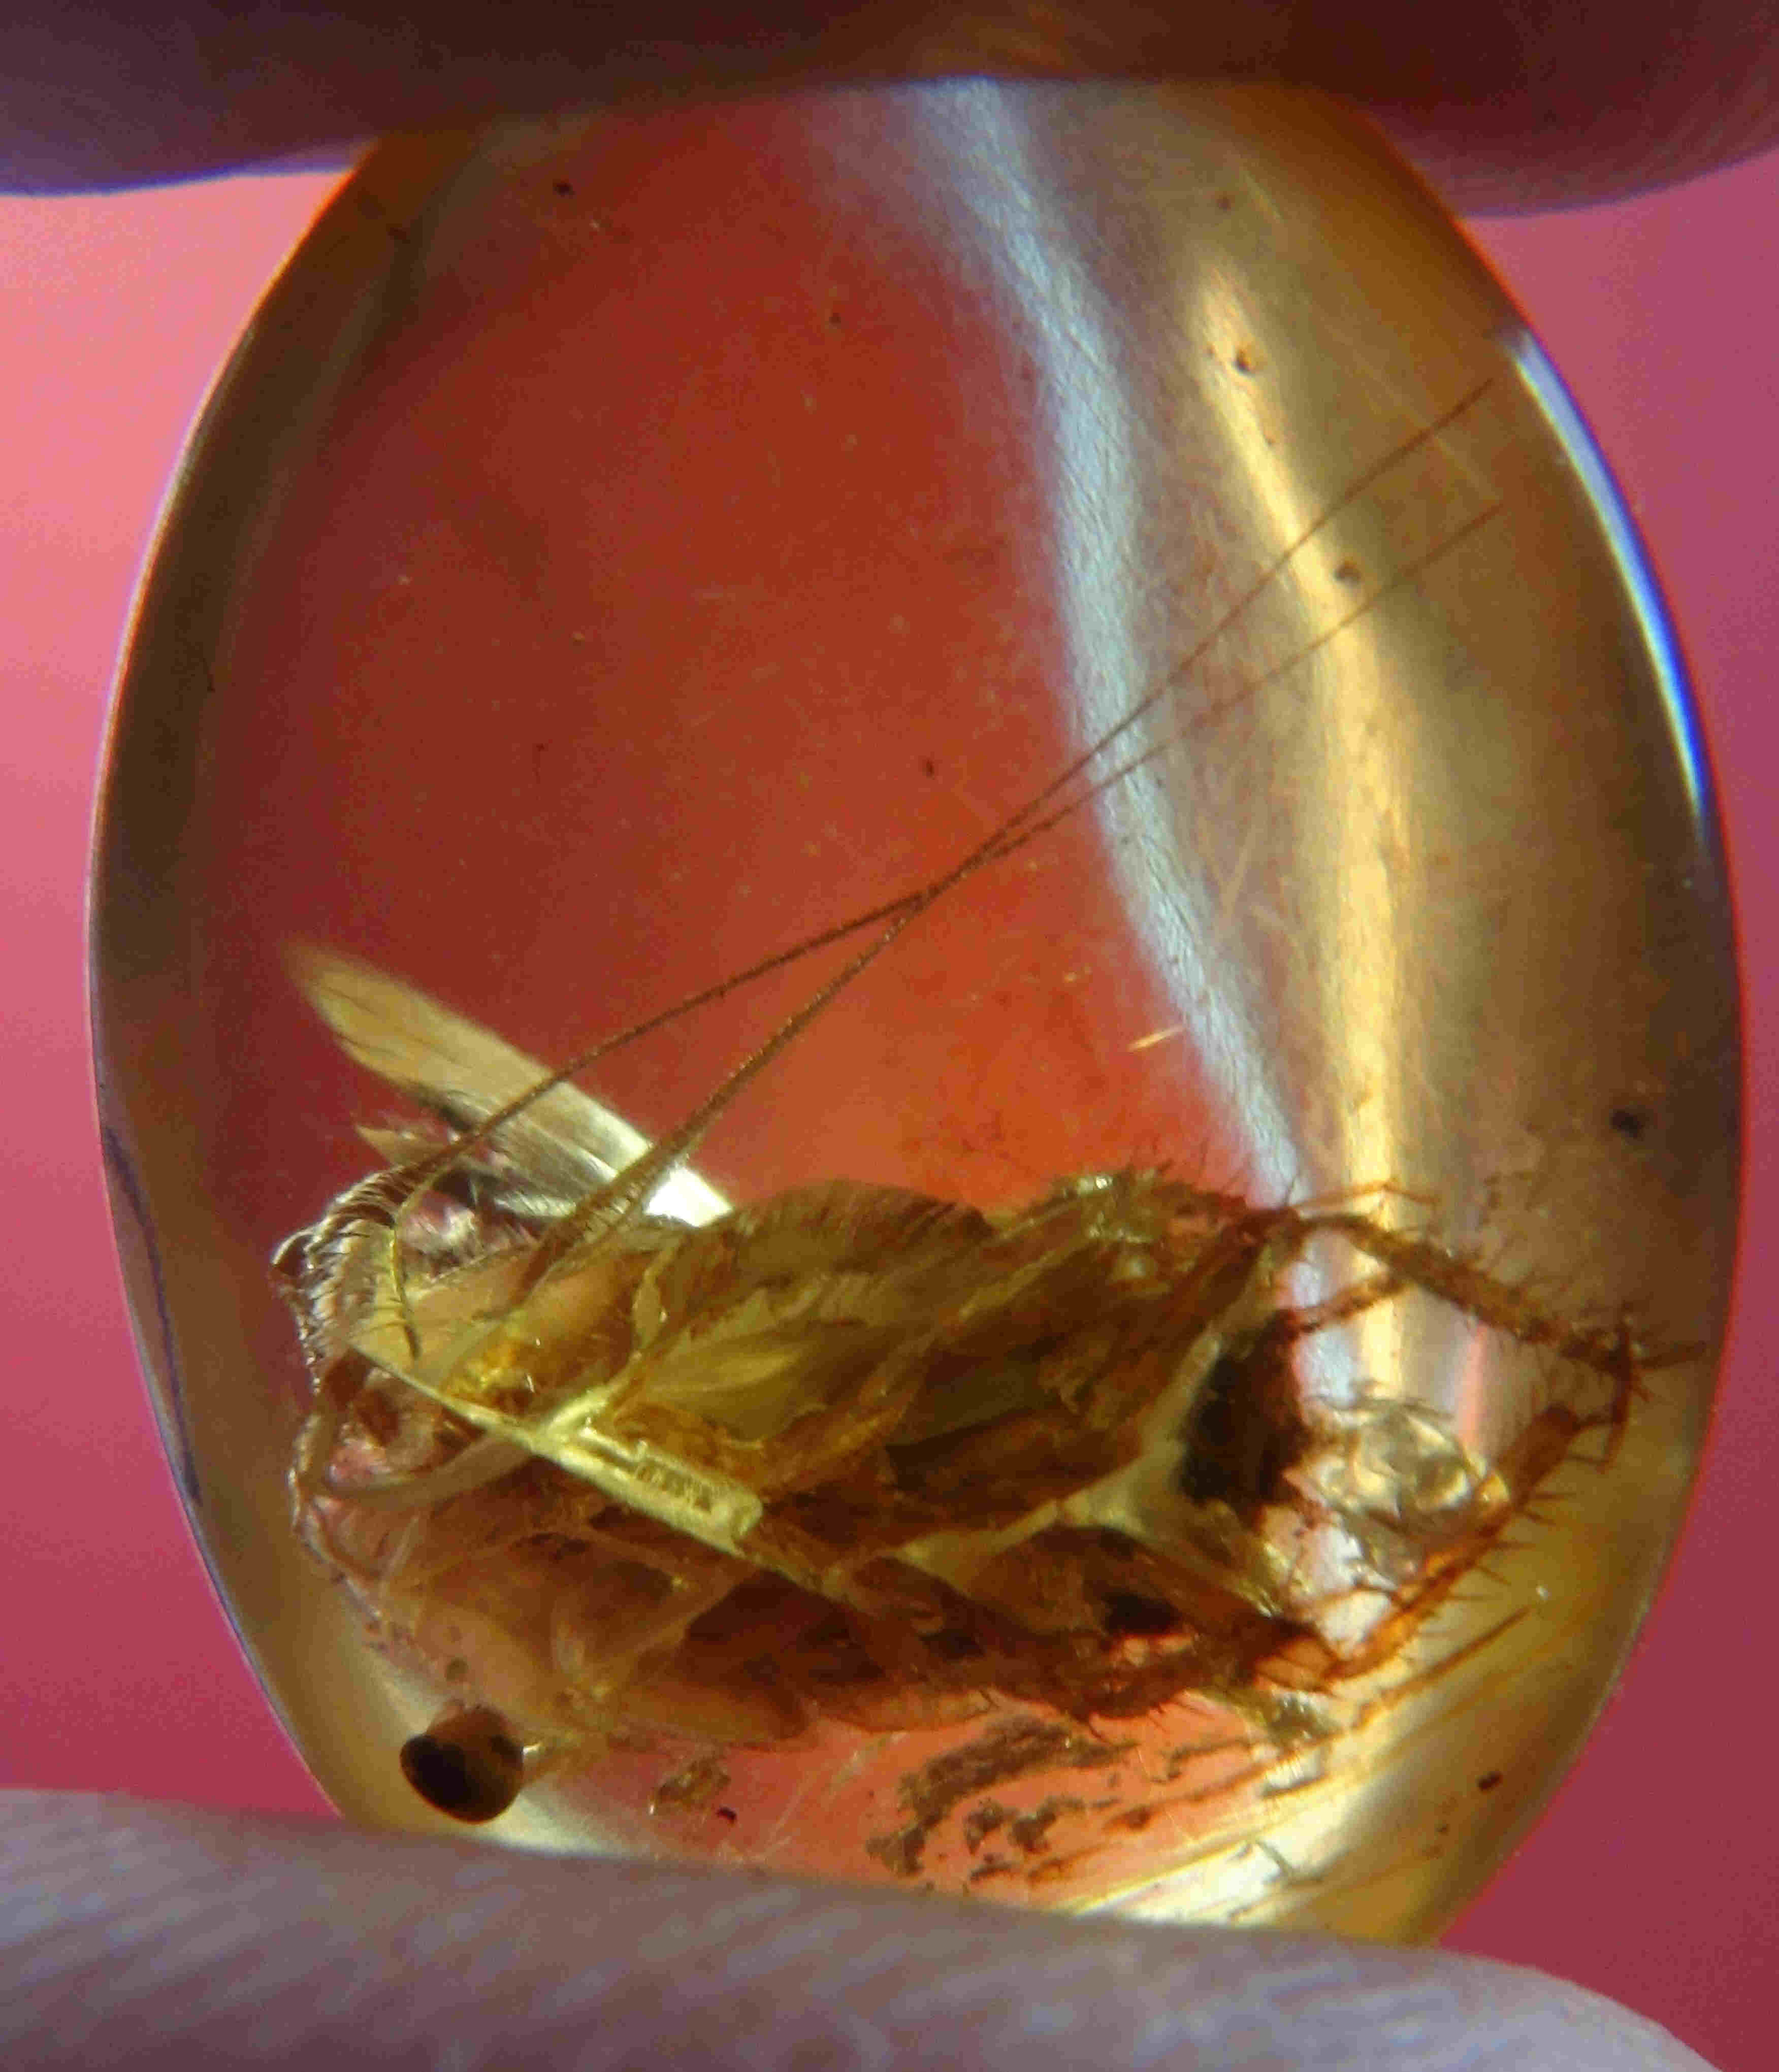 strange cockroach in amber